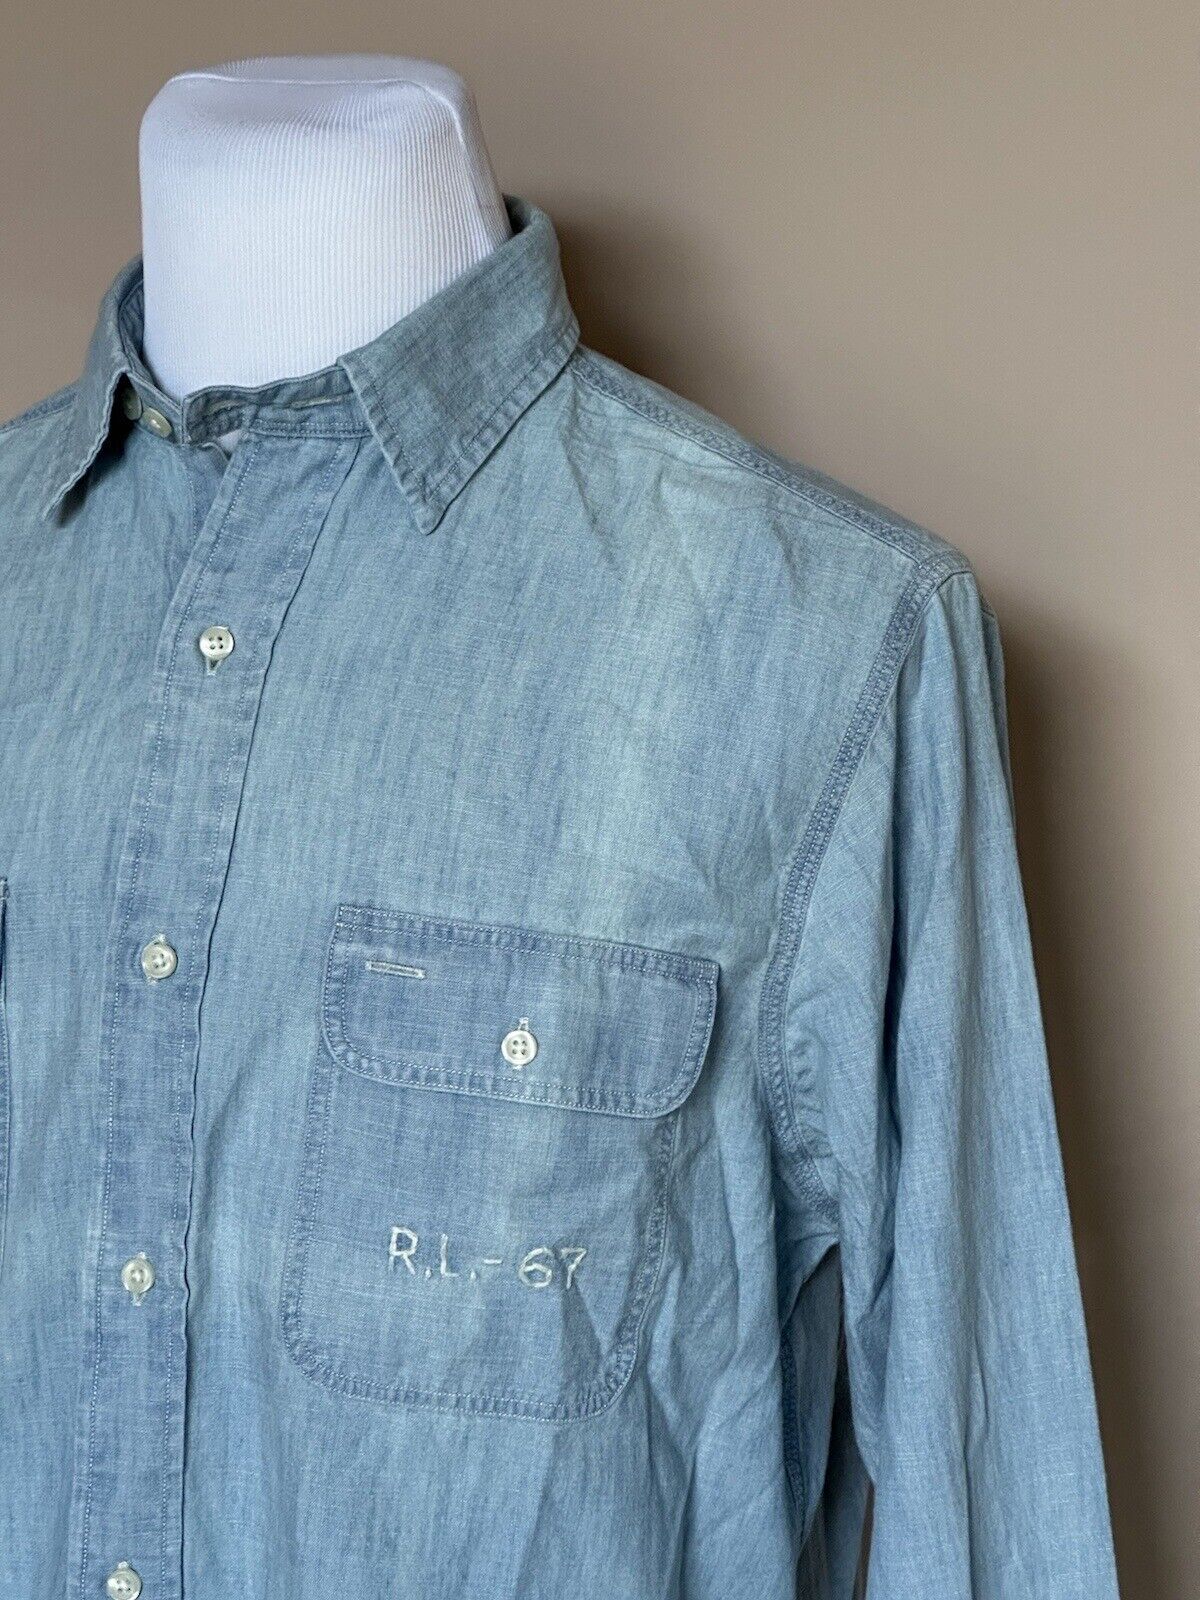 NWT $148 Polo Ralph Lauren Men's Button-down Blue Cotton Shirt XL